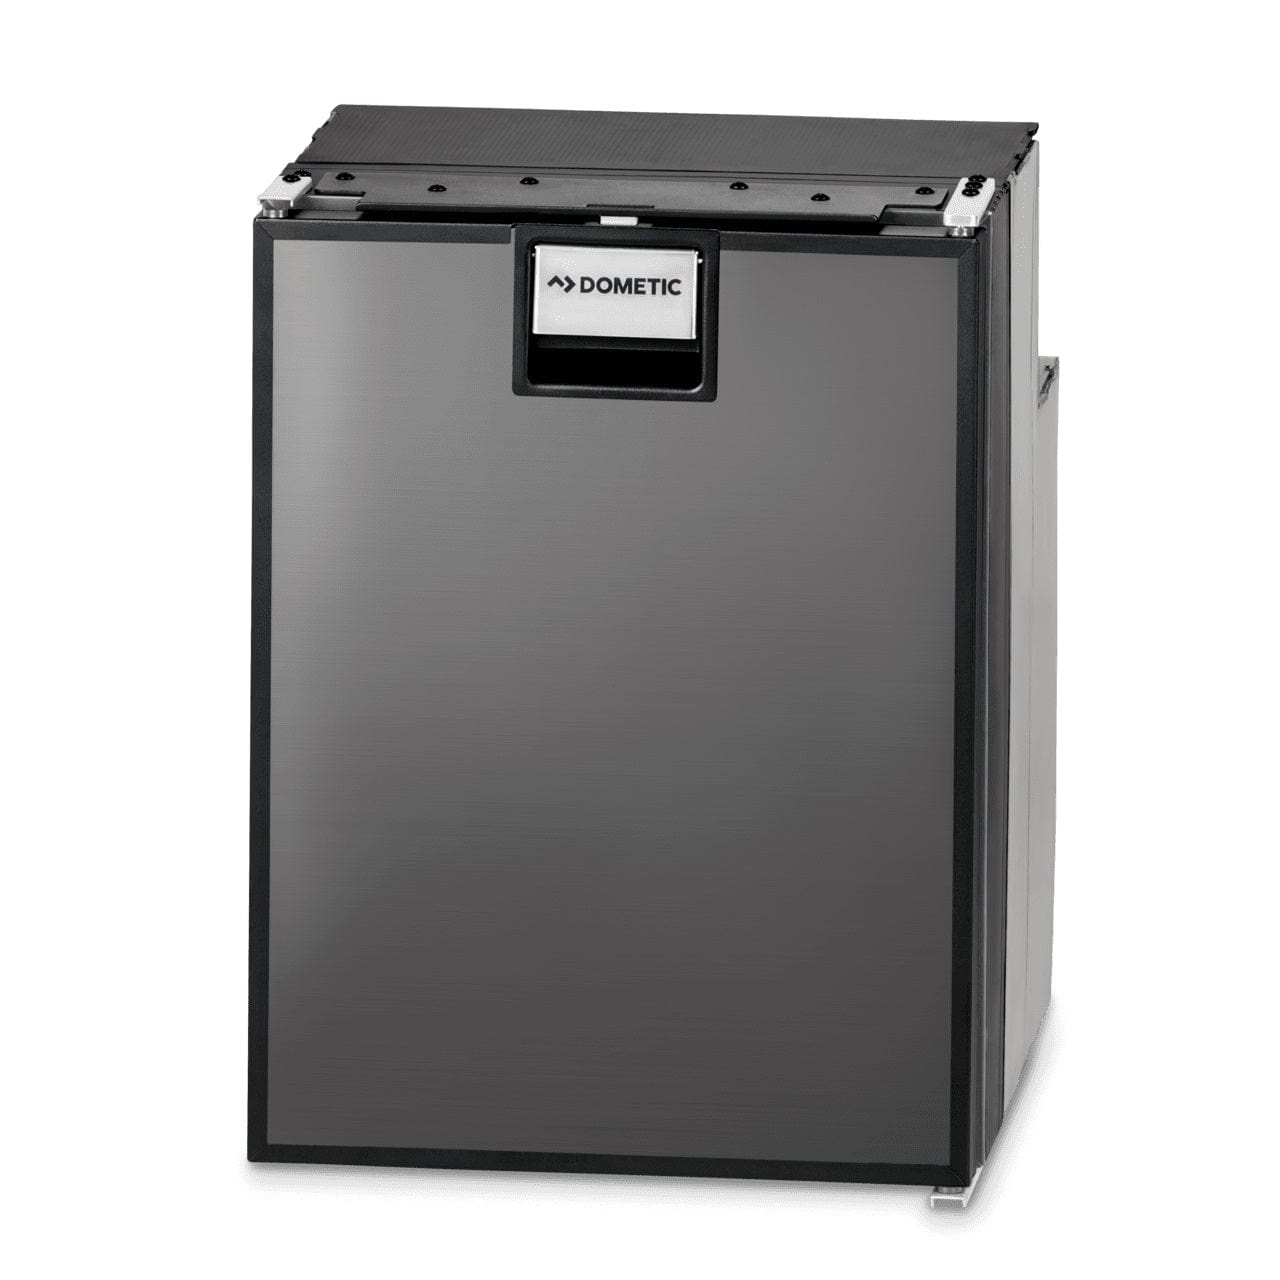 Bi-Metal Refrigerator / Freezer Thermometer - AM Conservation